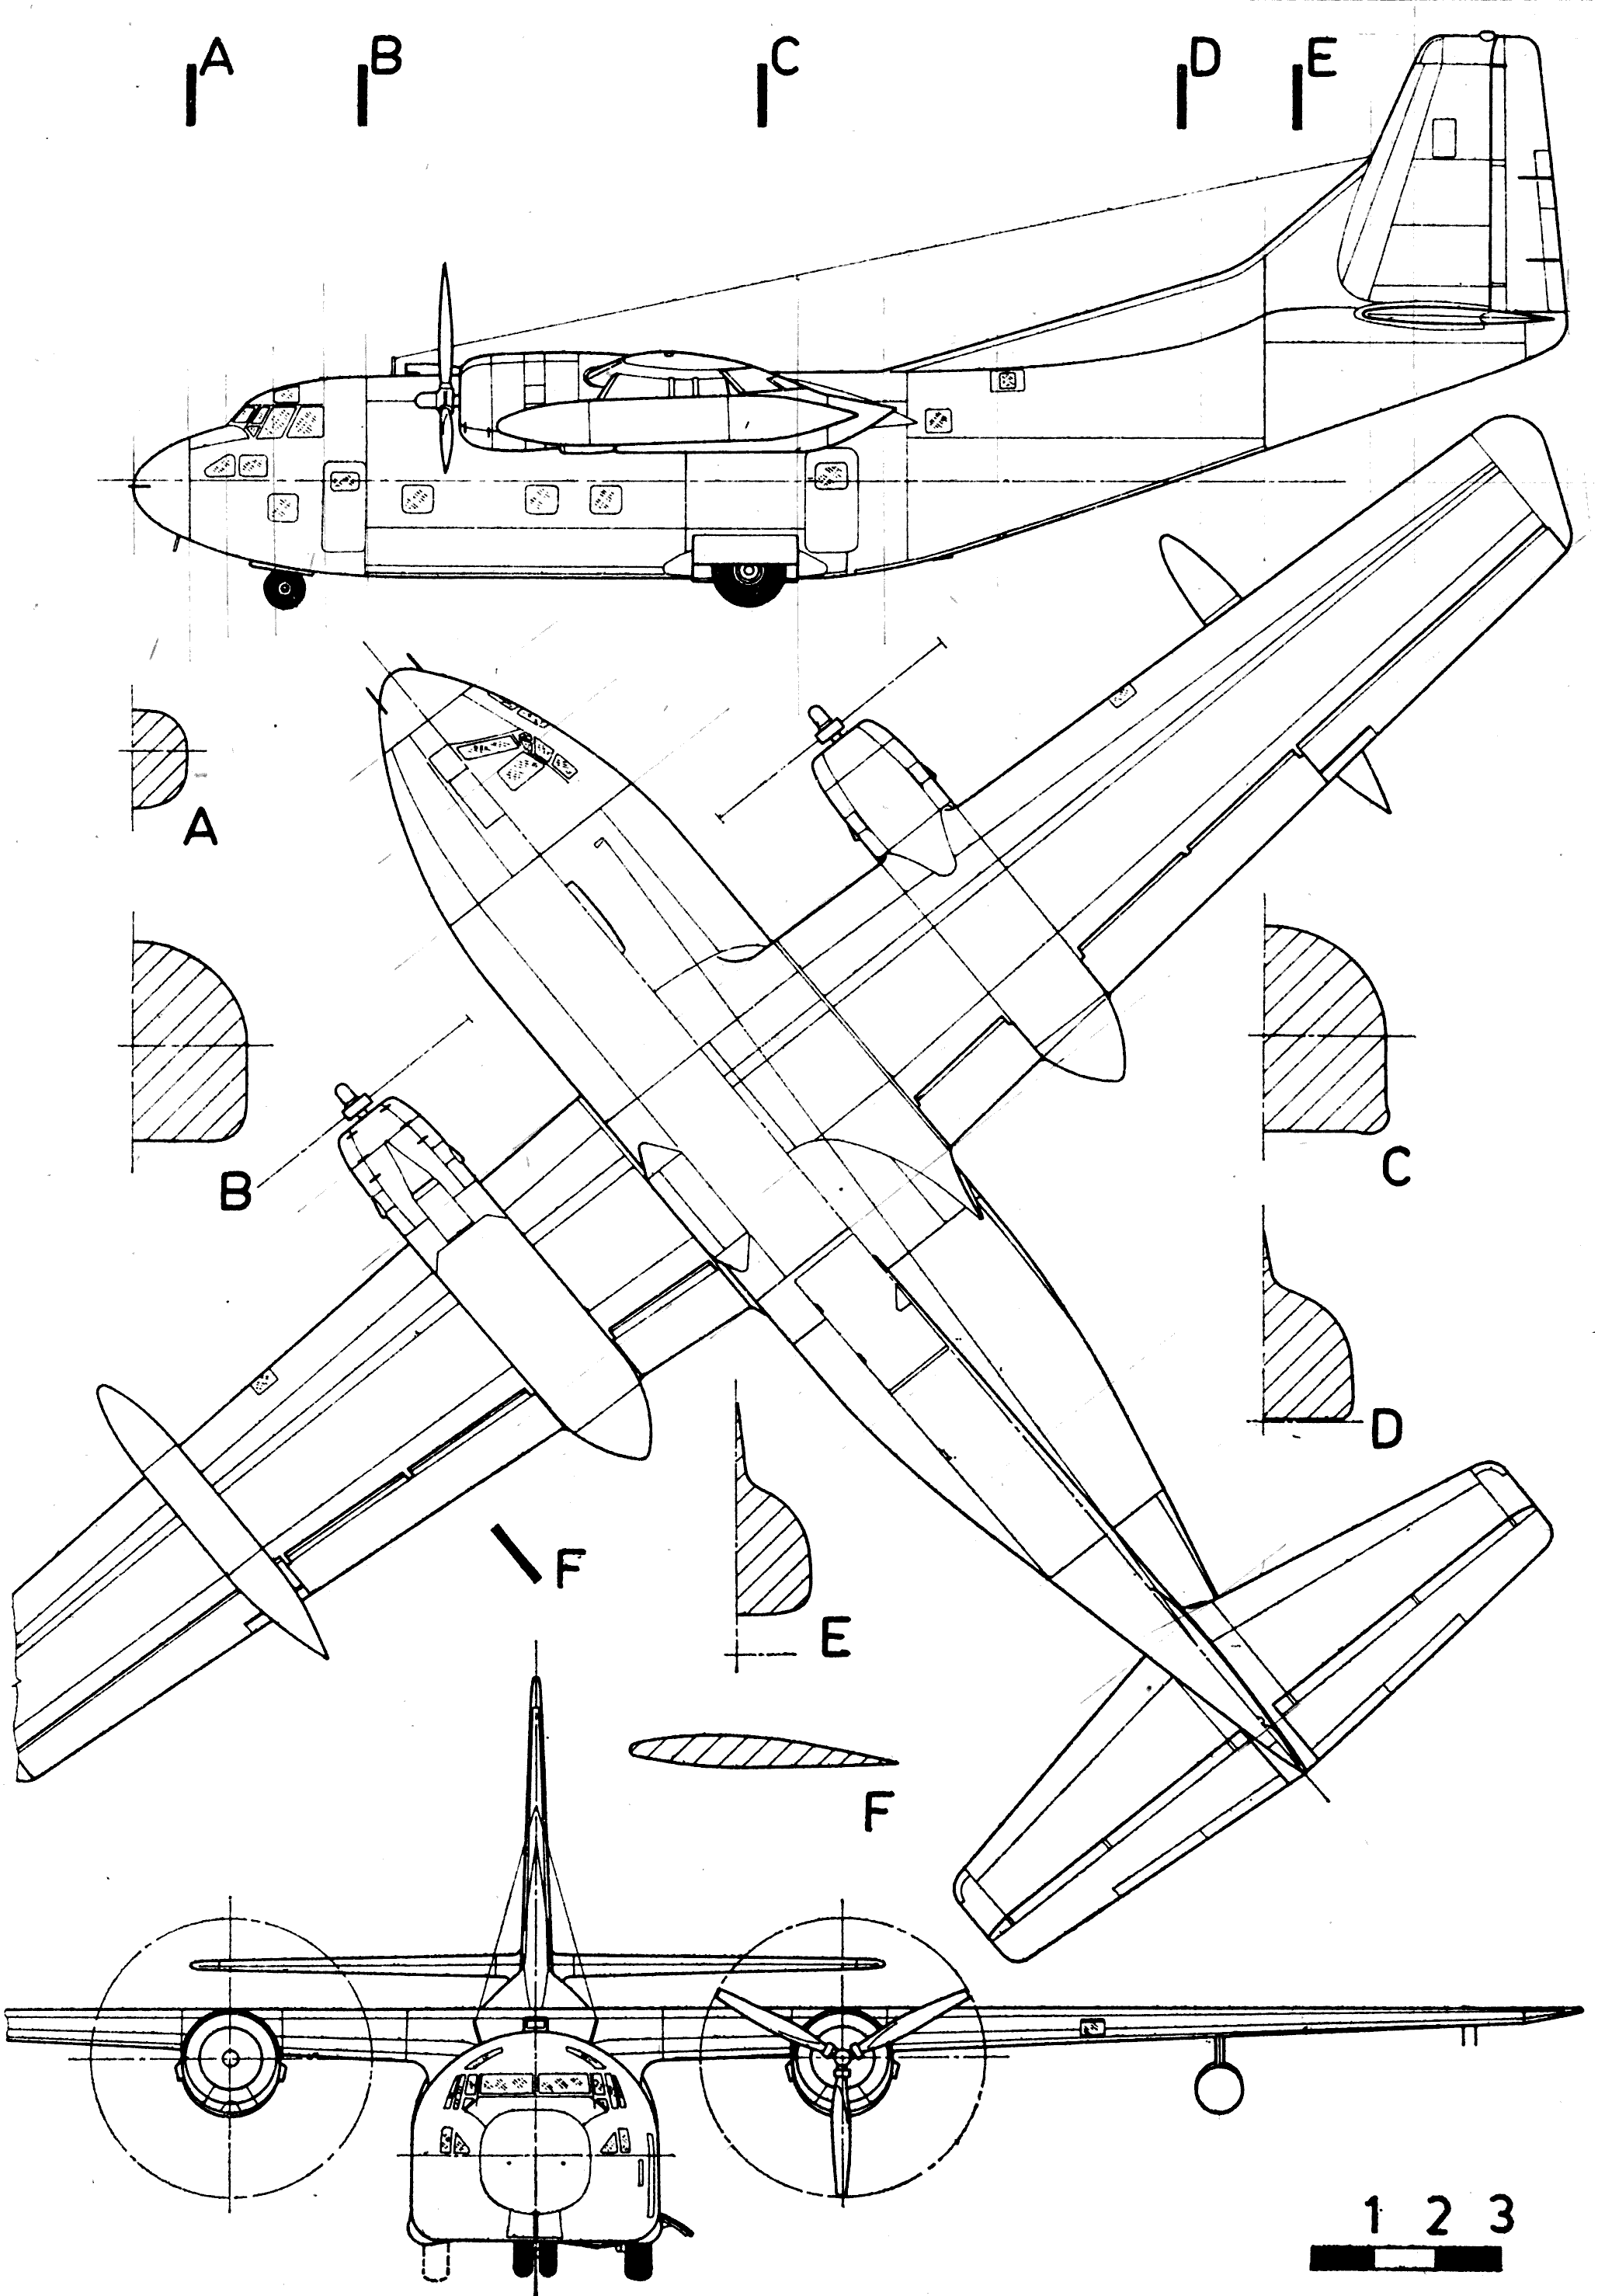 C-123 Provider blueprint